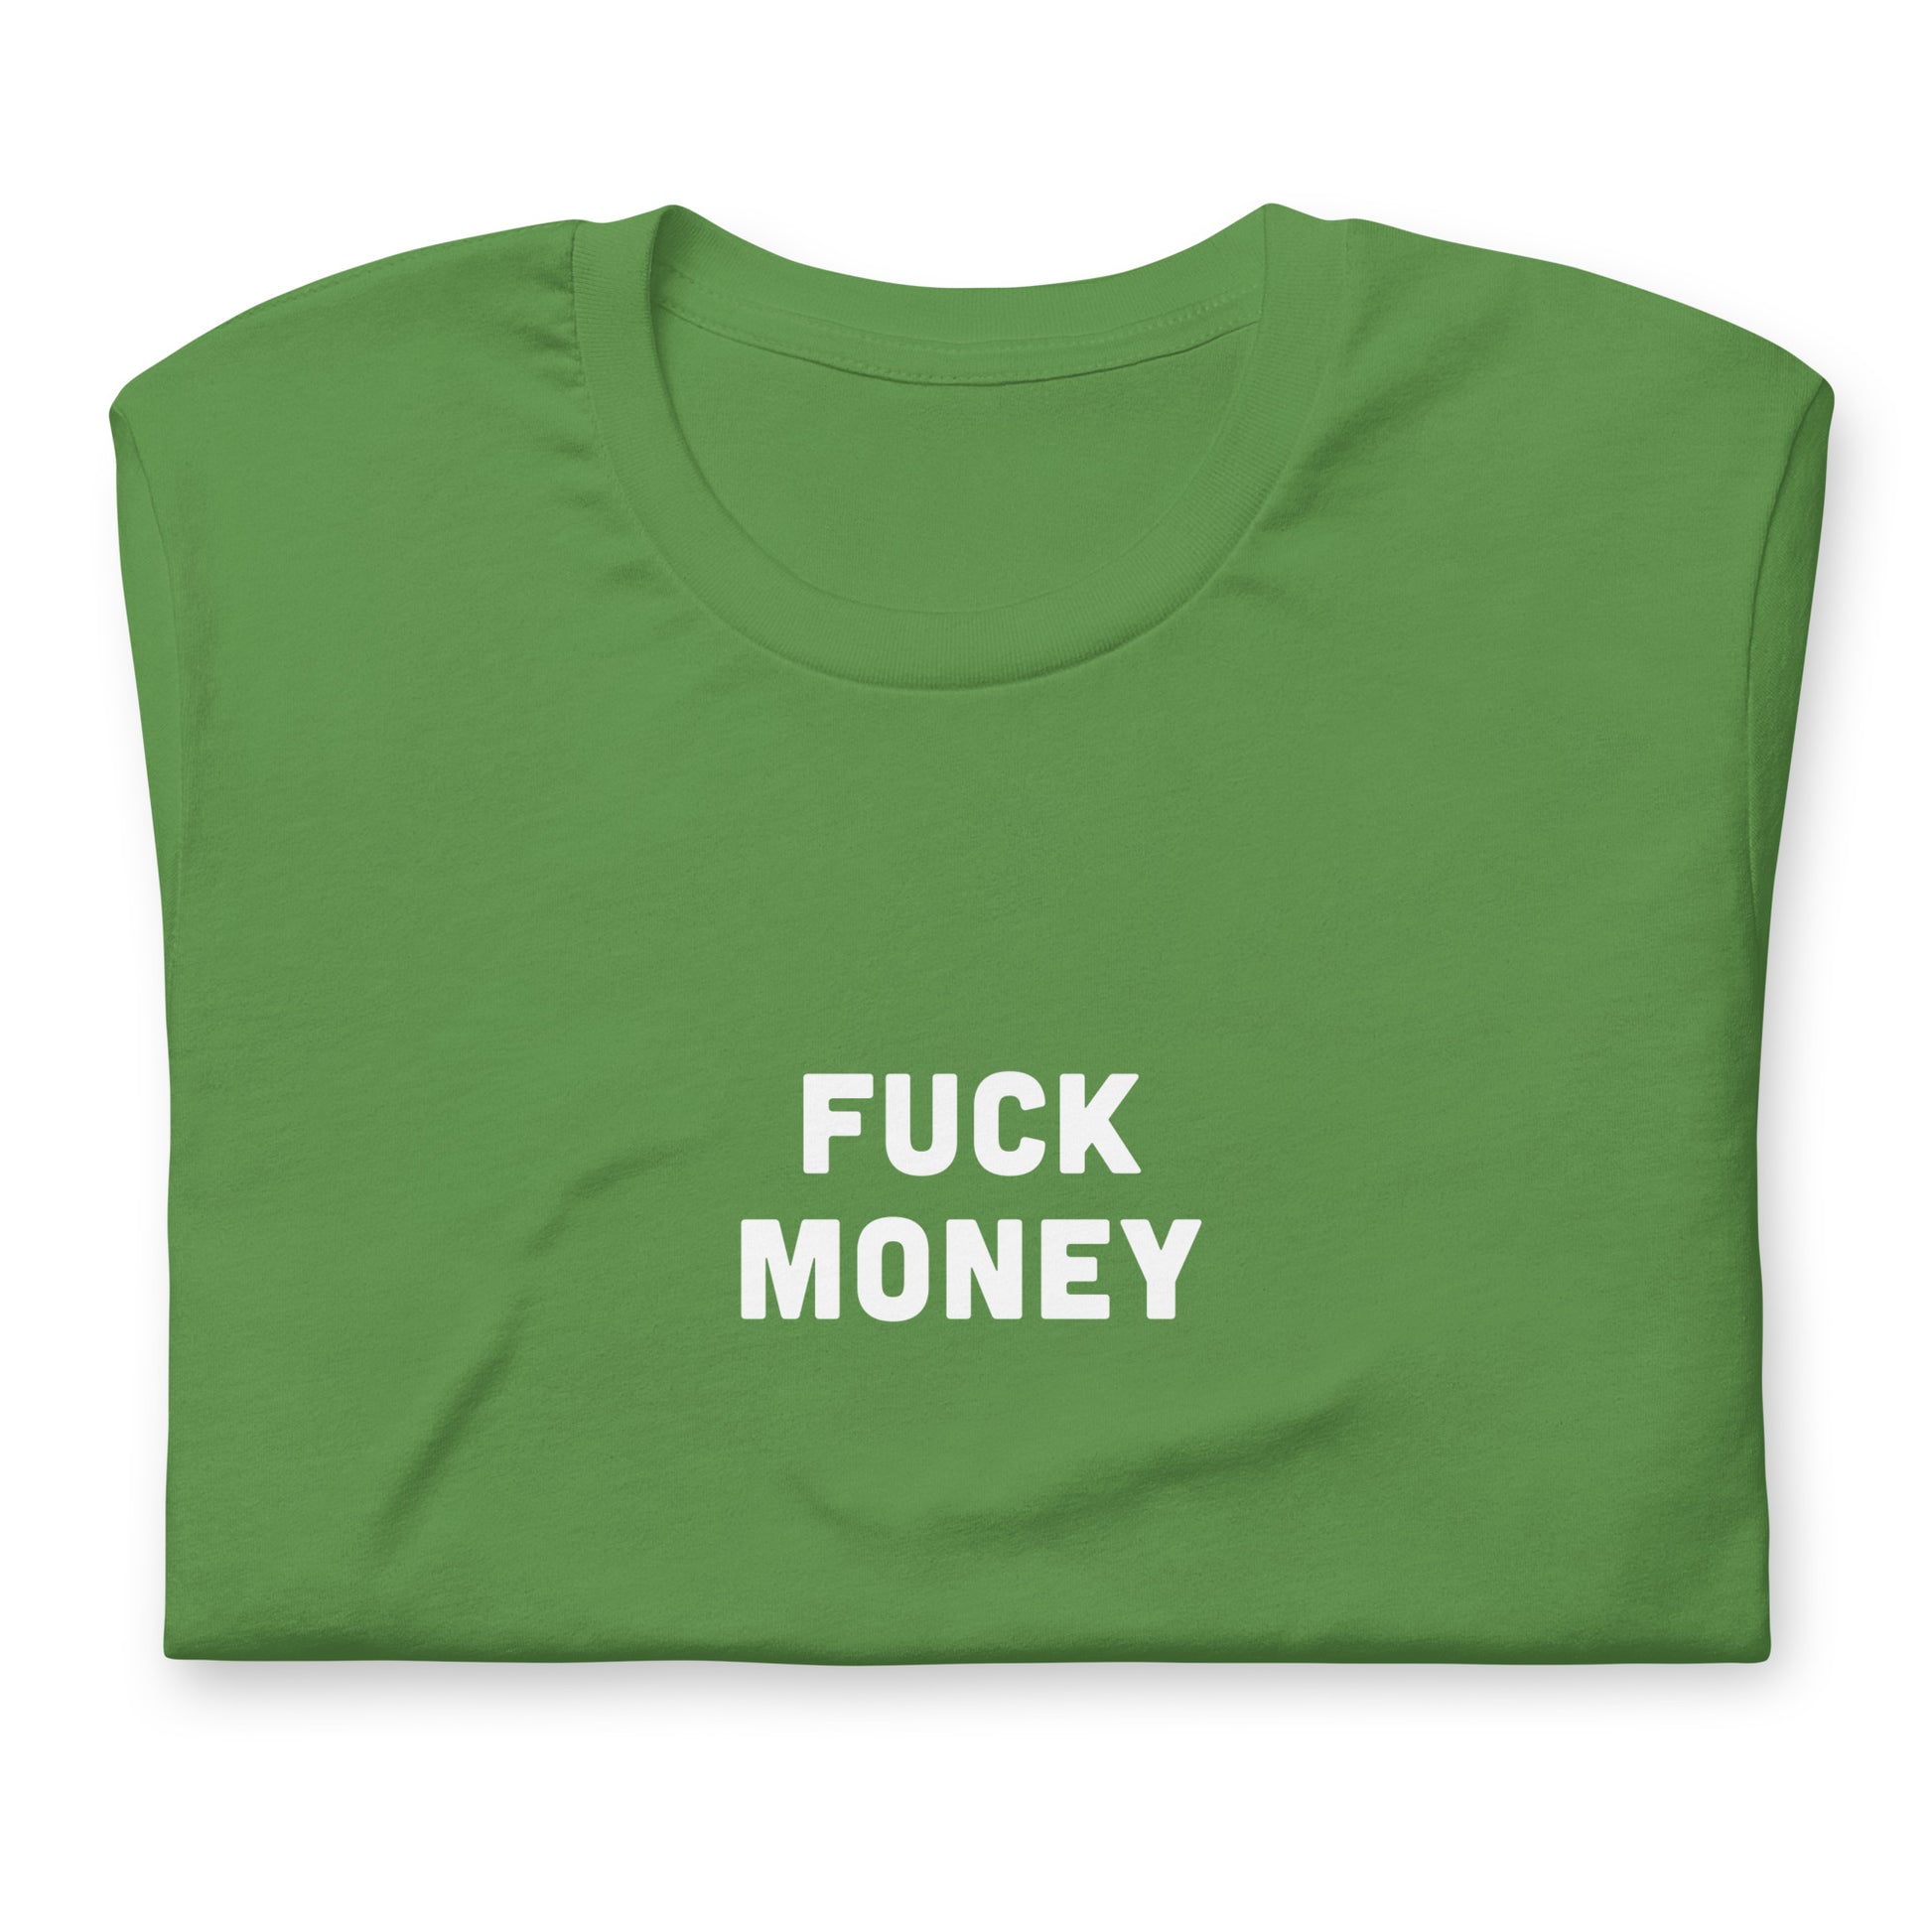 Fuck Money T-Shirt Size 2XL Color Navy